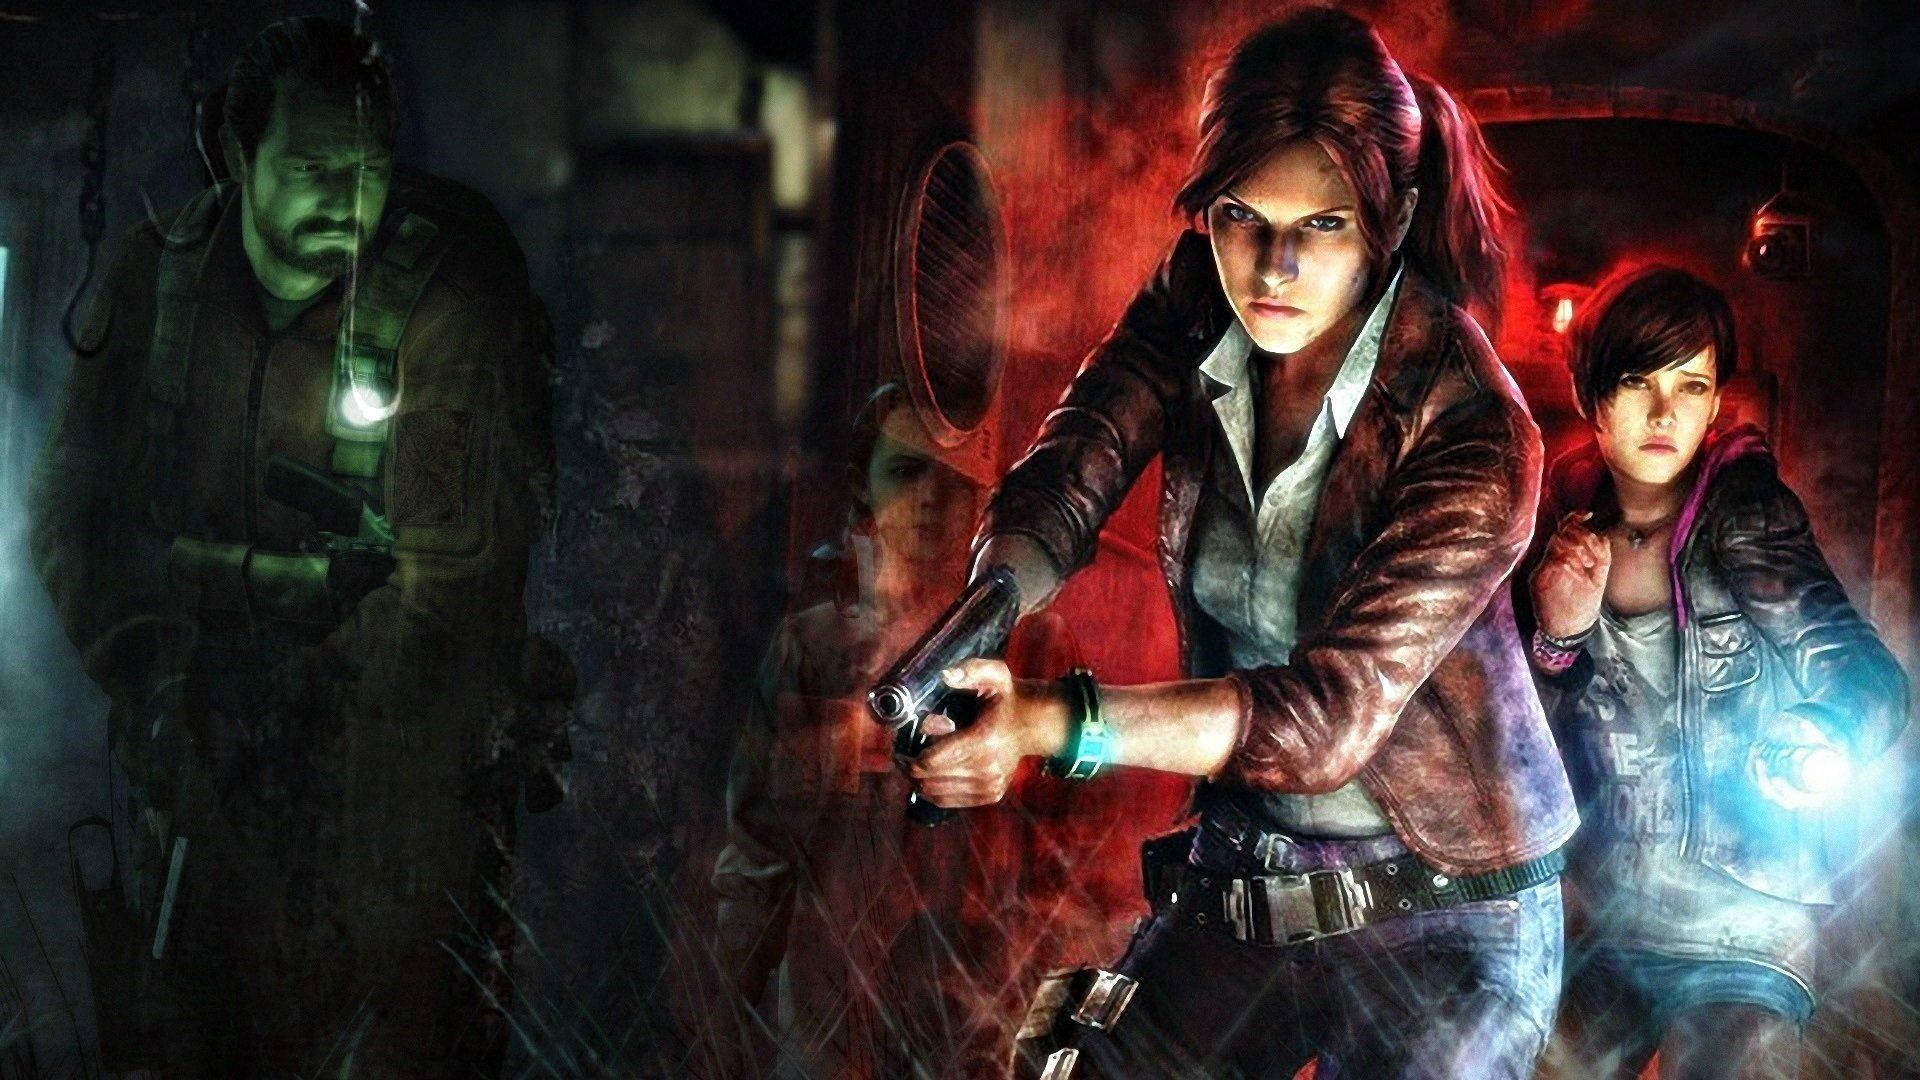 Bilder Zum Resident Evil 2 Remake